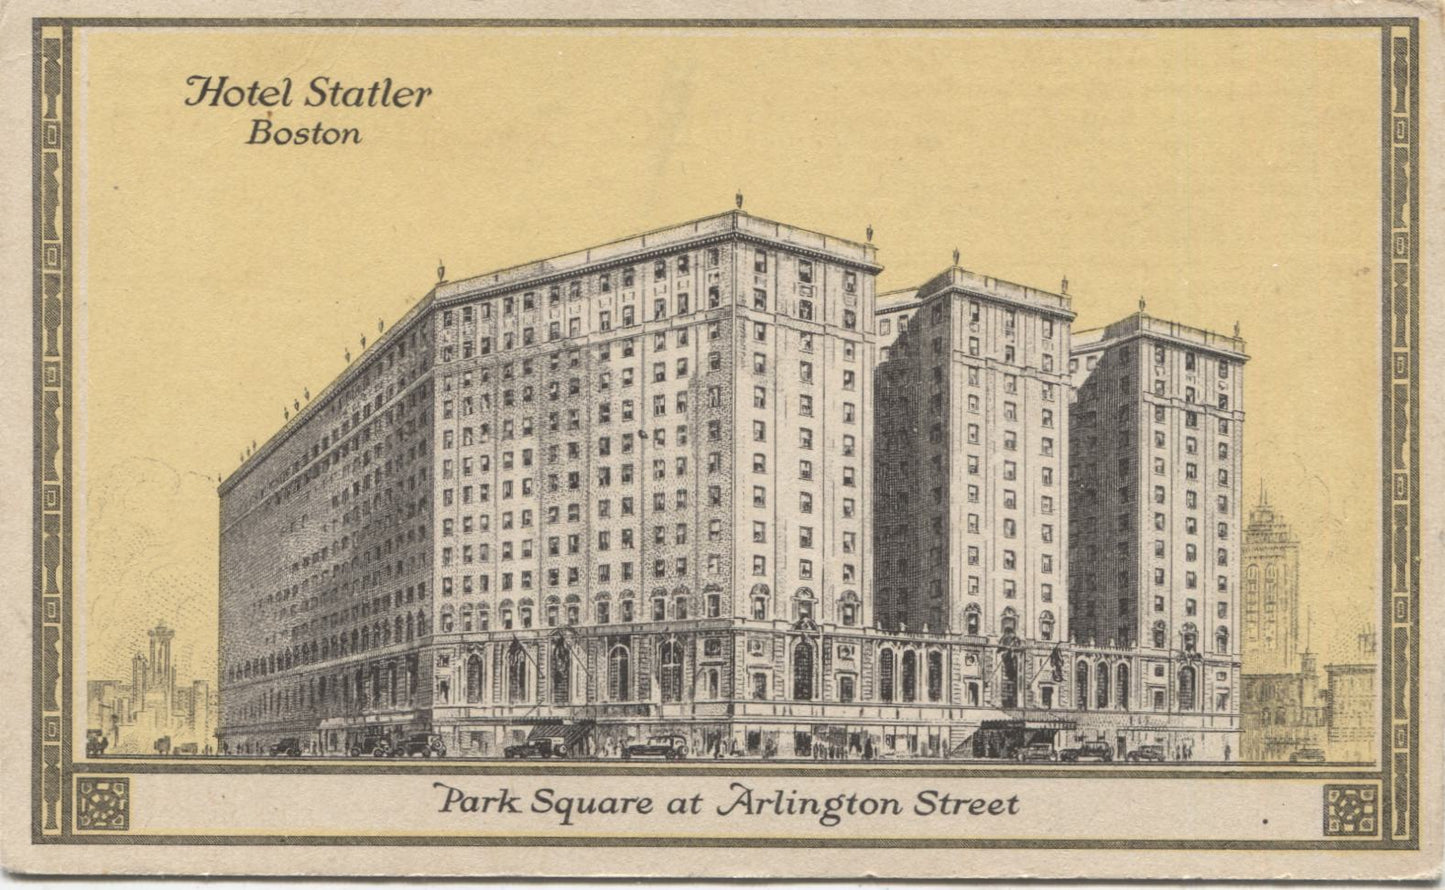 Hotel Statler, Park Square at Arlington Street, Boston, MA Vintage Postcard